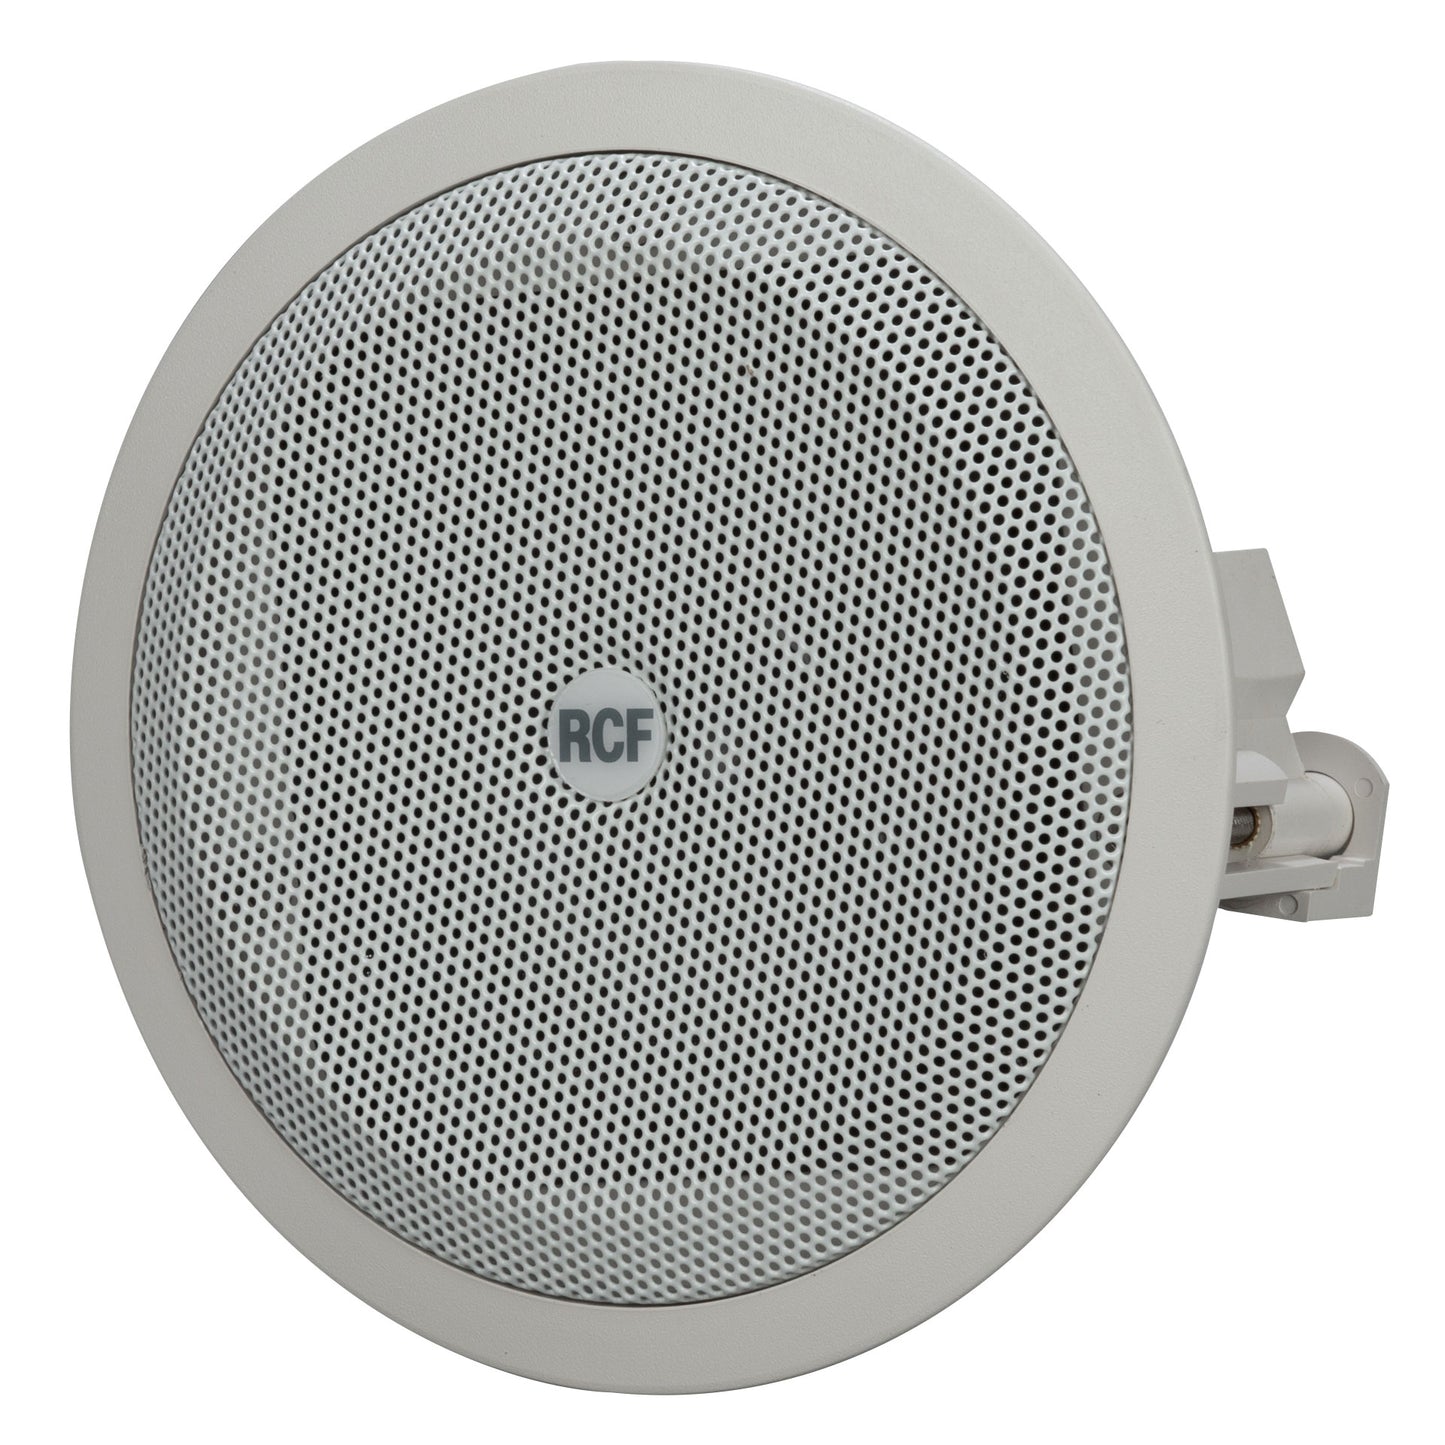 RCF PL40 Passive 3.5" Ceiling Speaker (8 ohm/70V/IP44/Dog Ears)